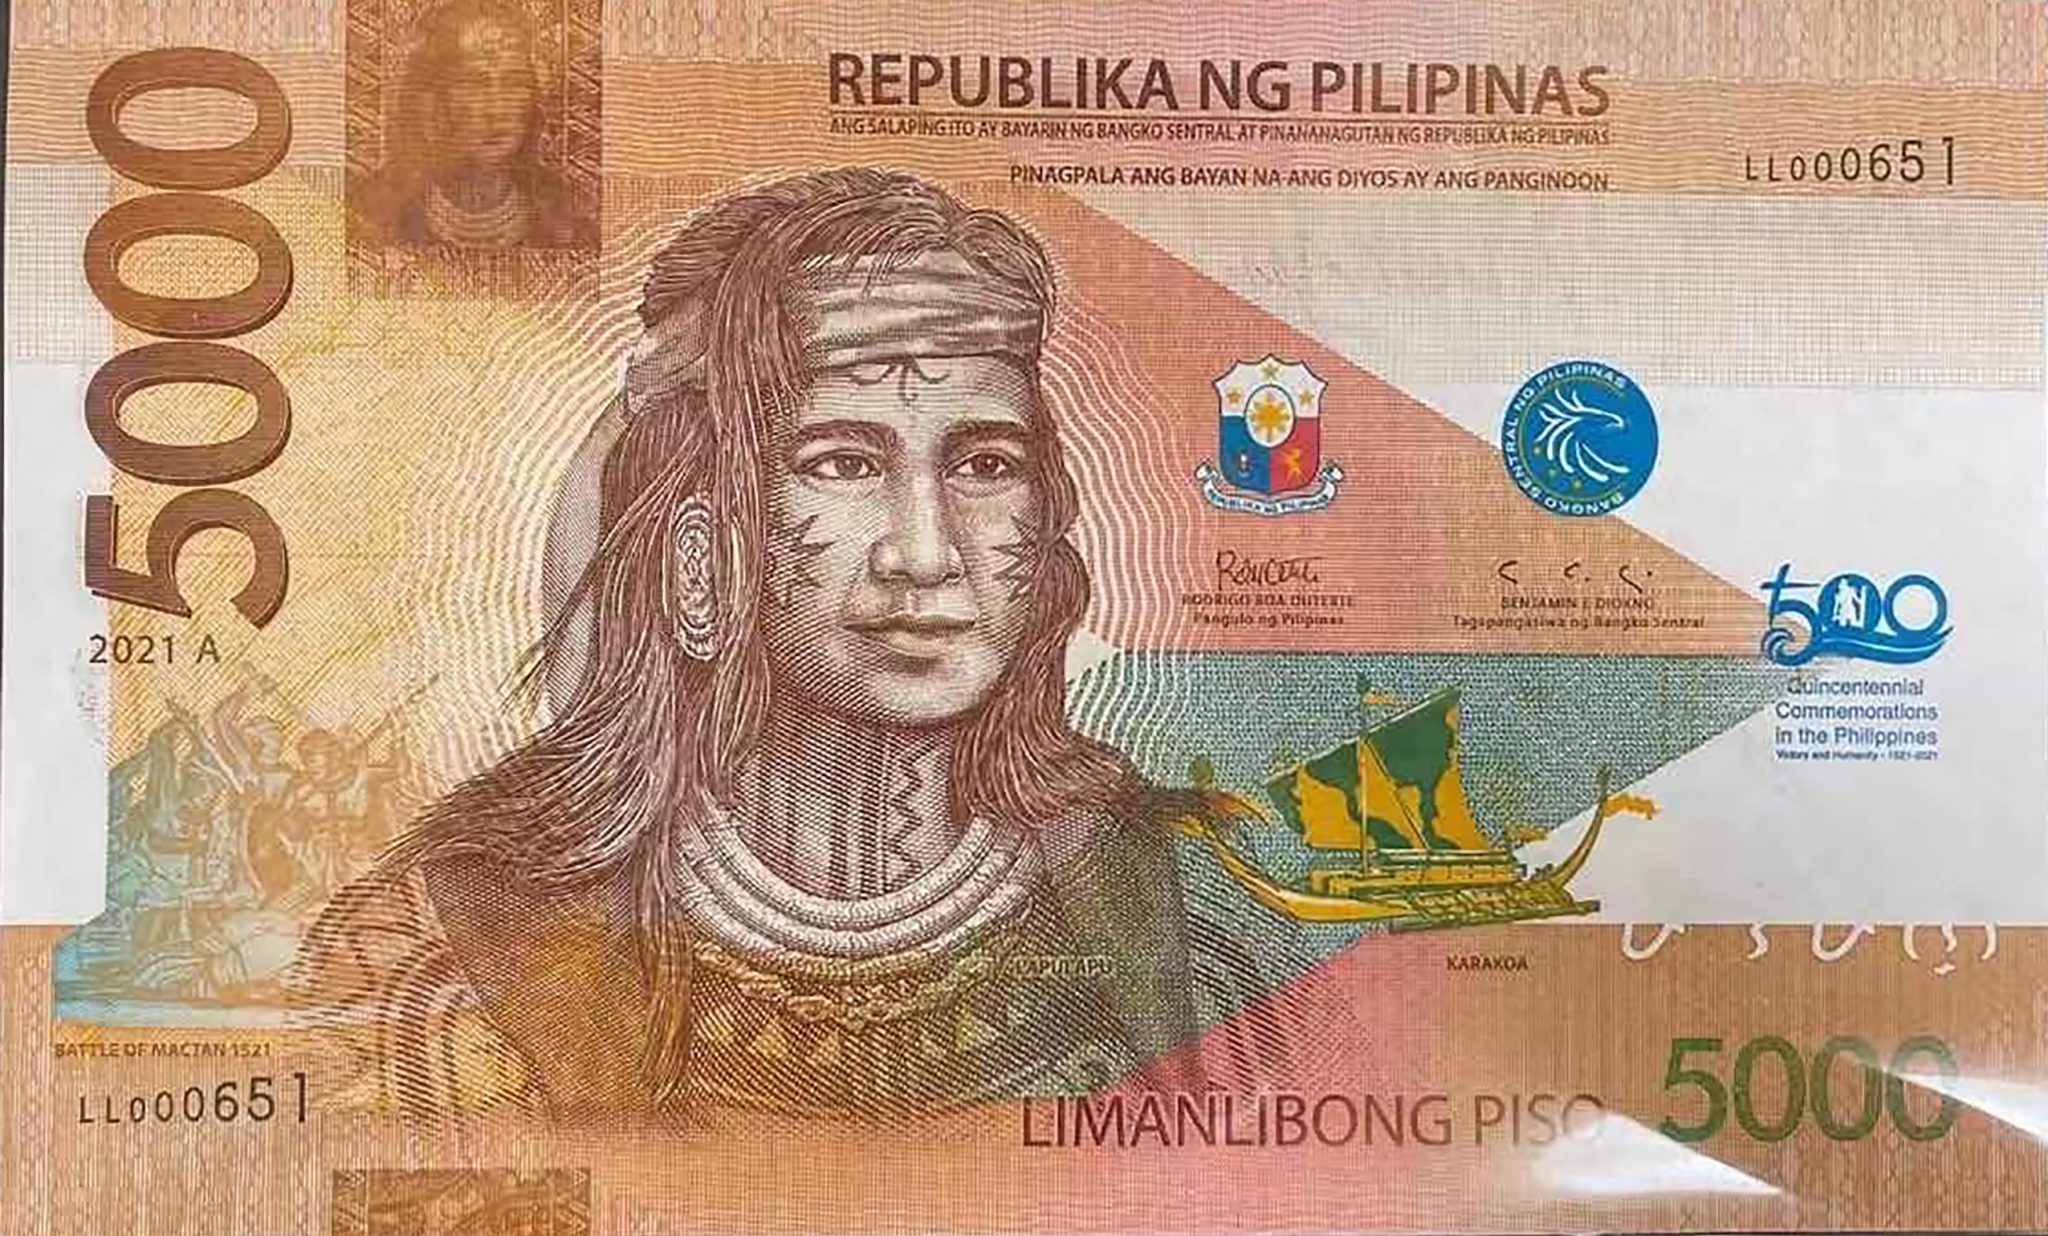 Philippines new date (2021A) 5,000peso commemorative note (B1095b